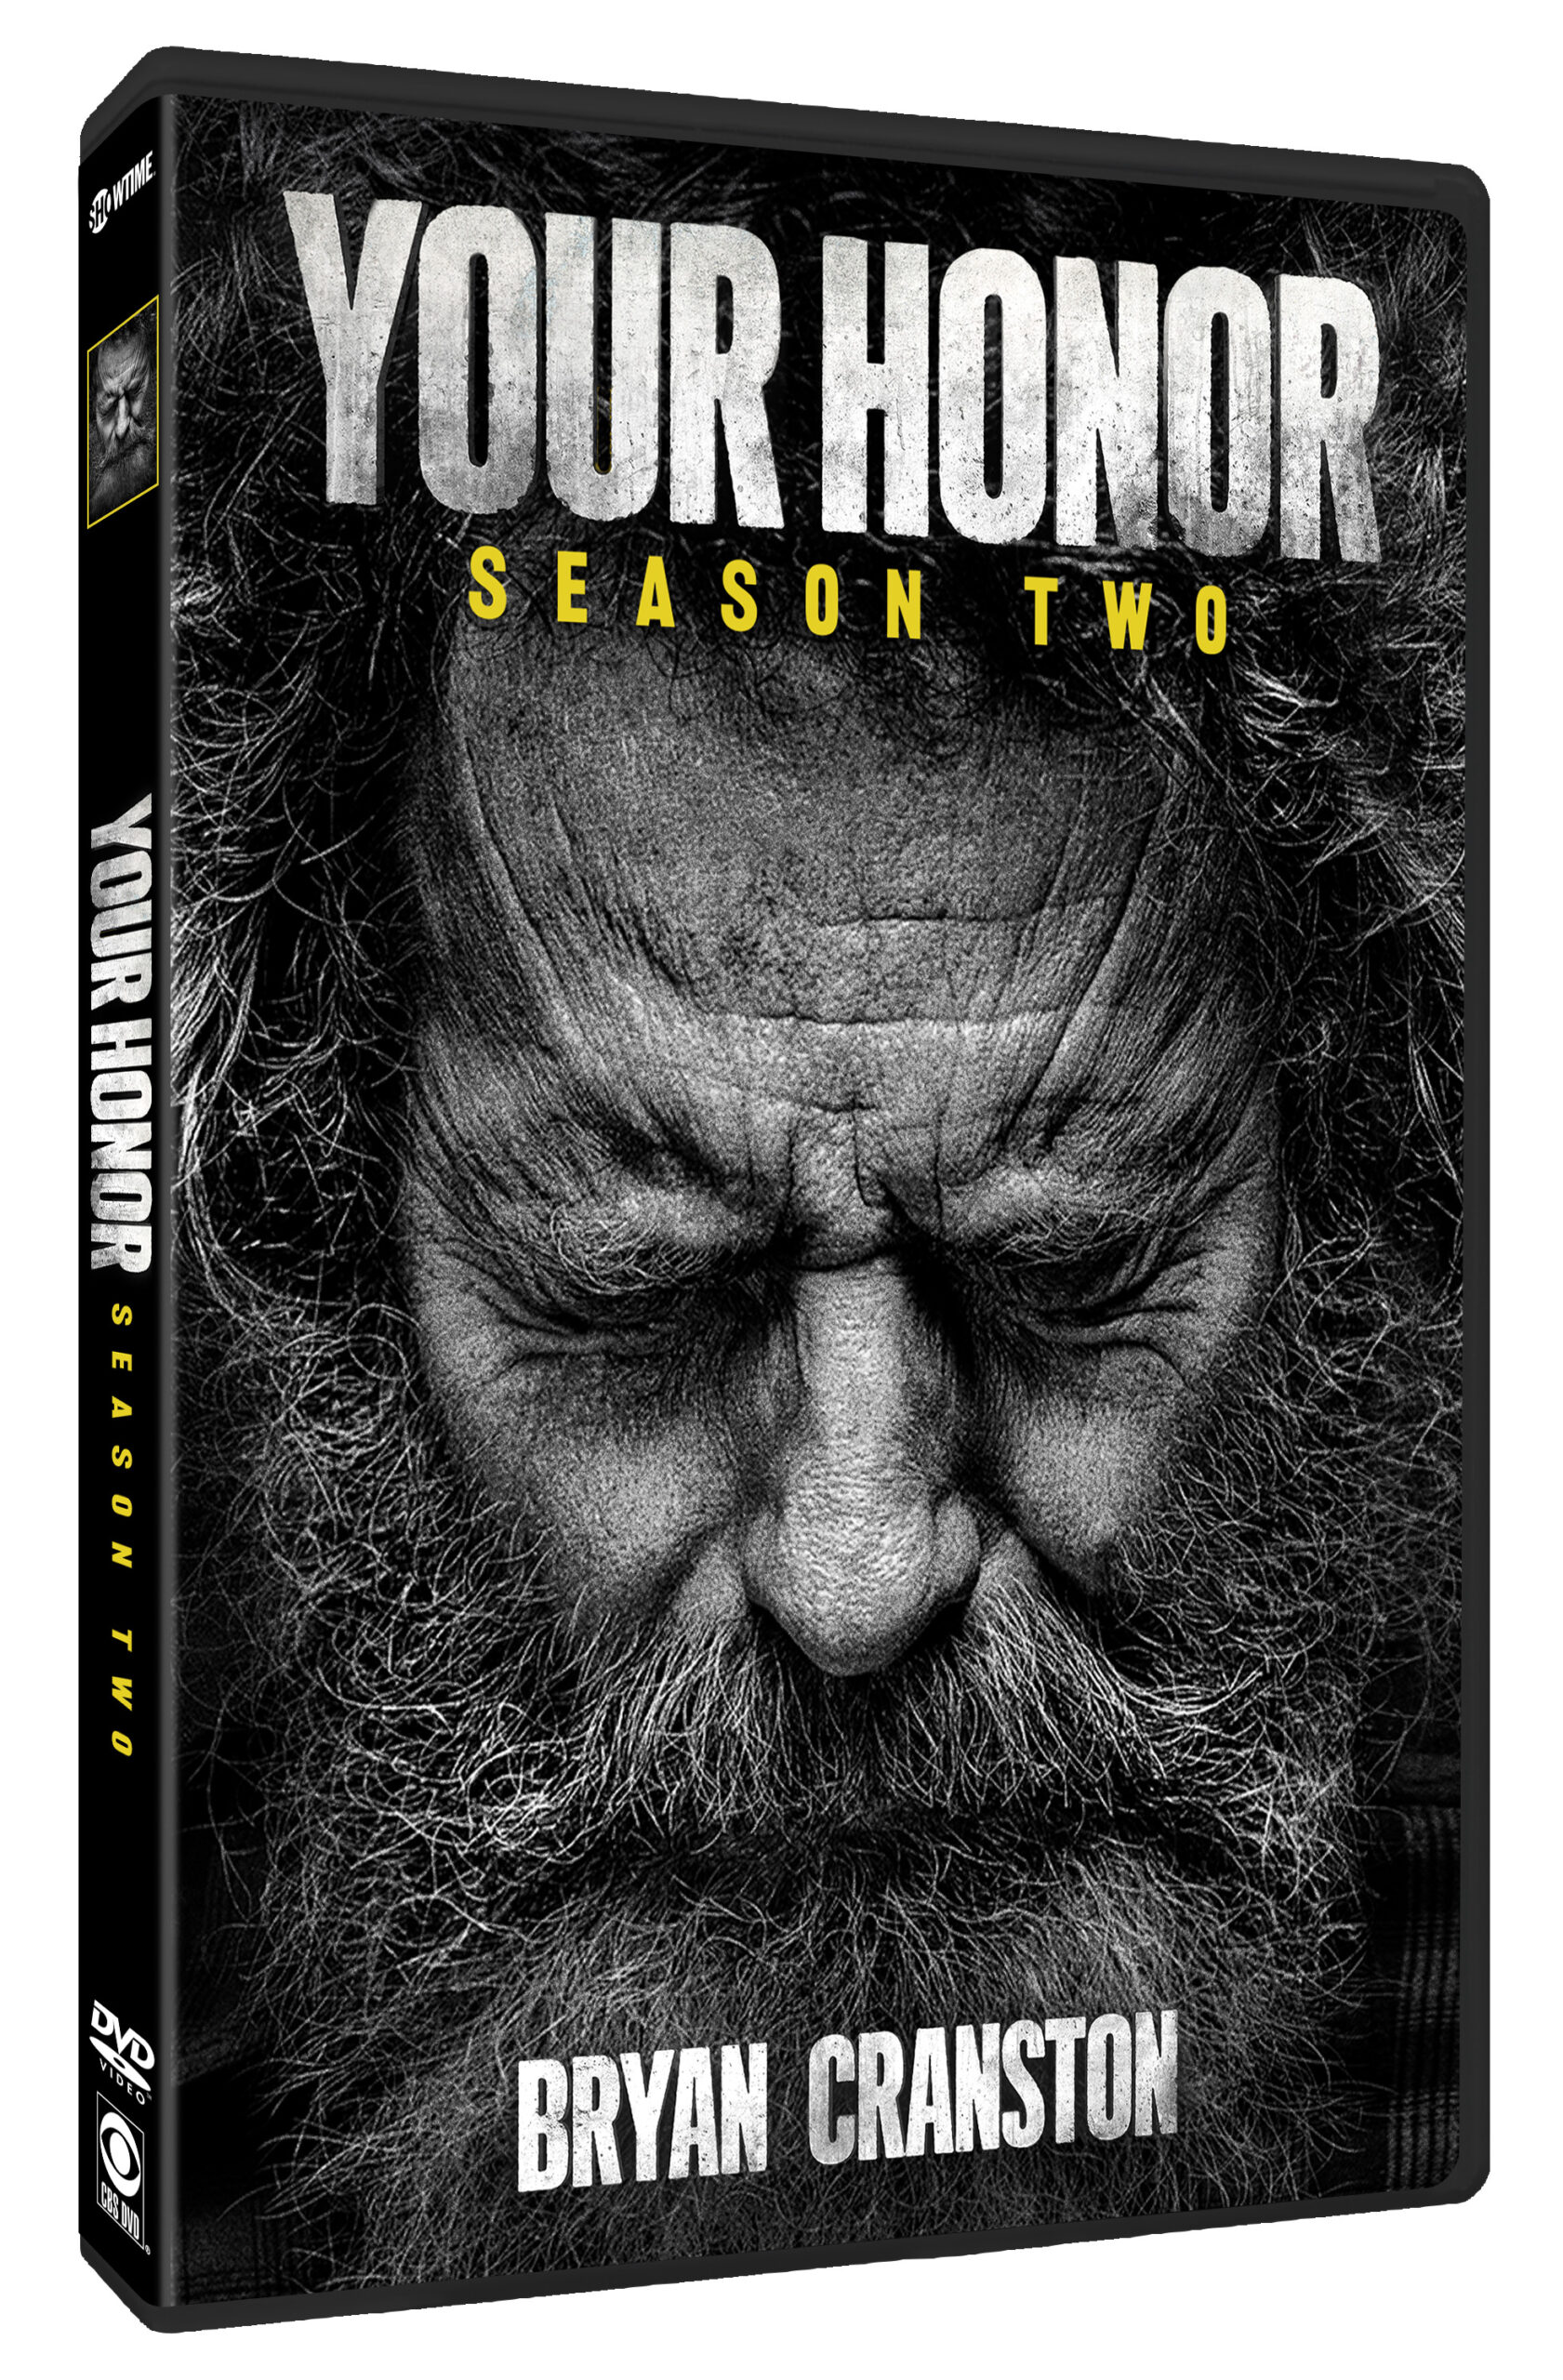 Your Honor Season 2 DVD cover (Paramount Home Entertainment)